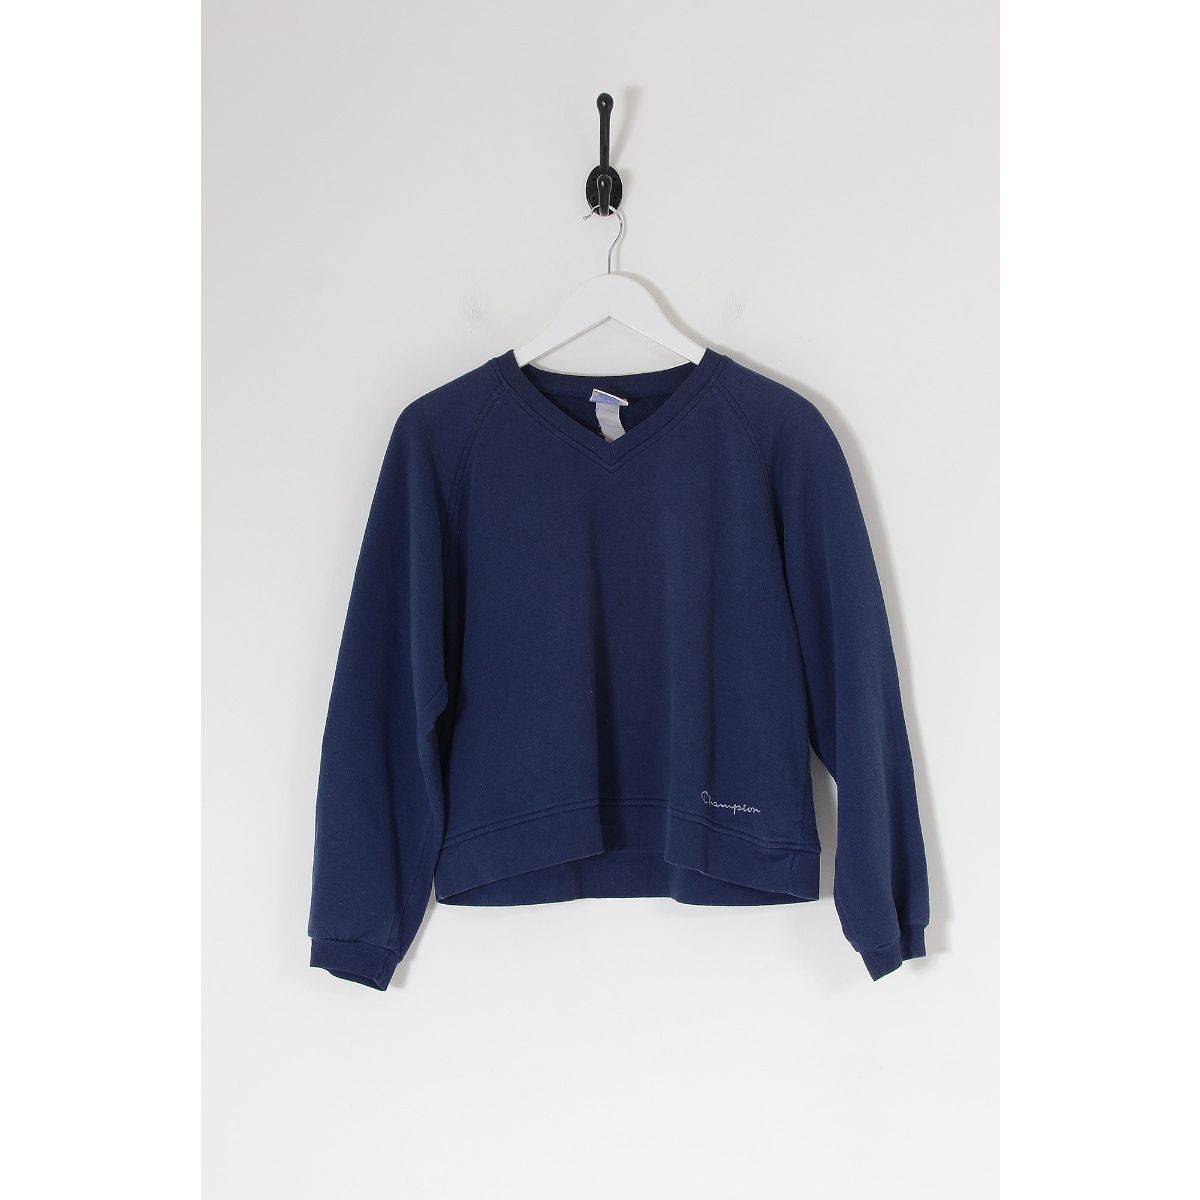 Vintage CHAMPION Cropped Sweatshirt Navy Blue Medium